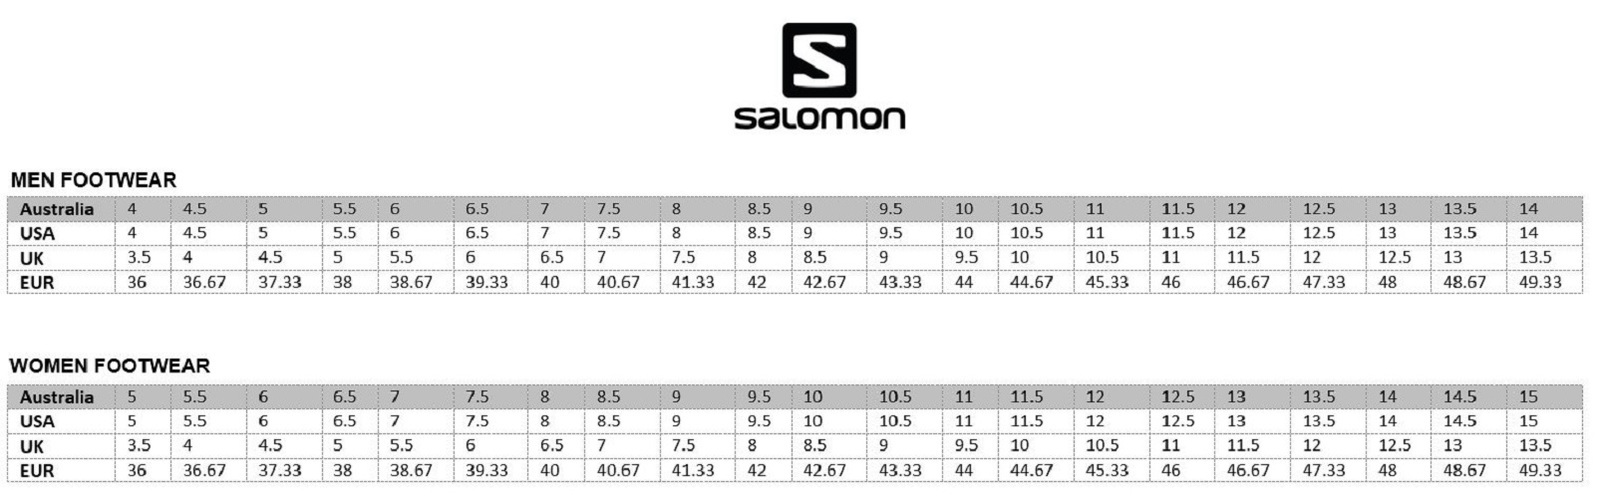 salomon boots size chart